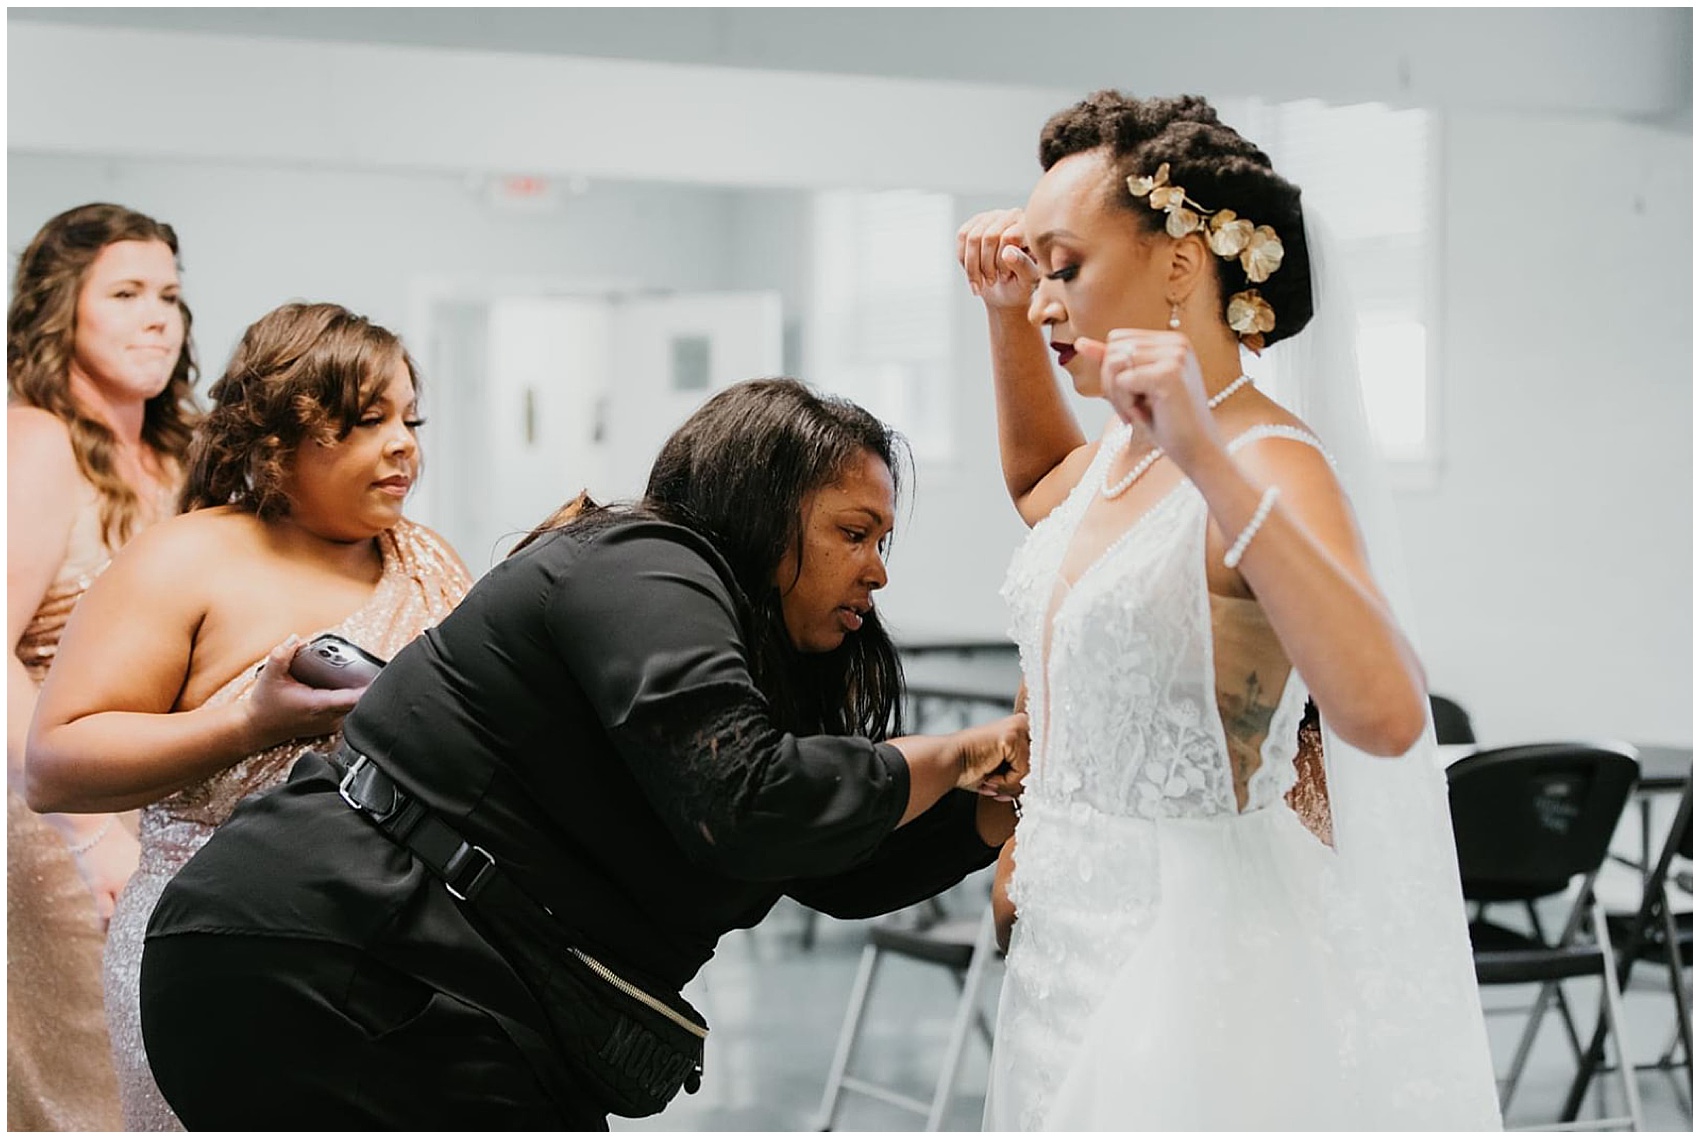 Wedding coordinator helps a bride get into her dress with bridesmaids PLS Coordinate